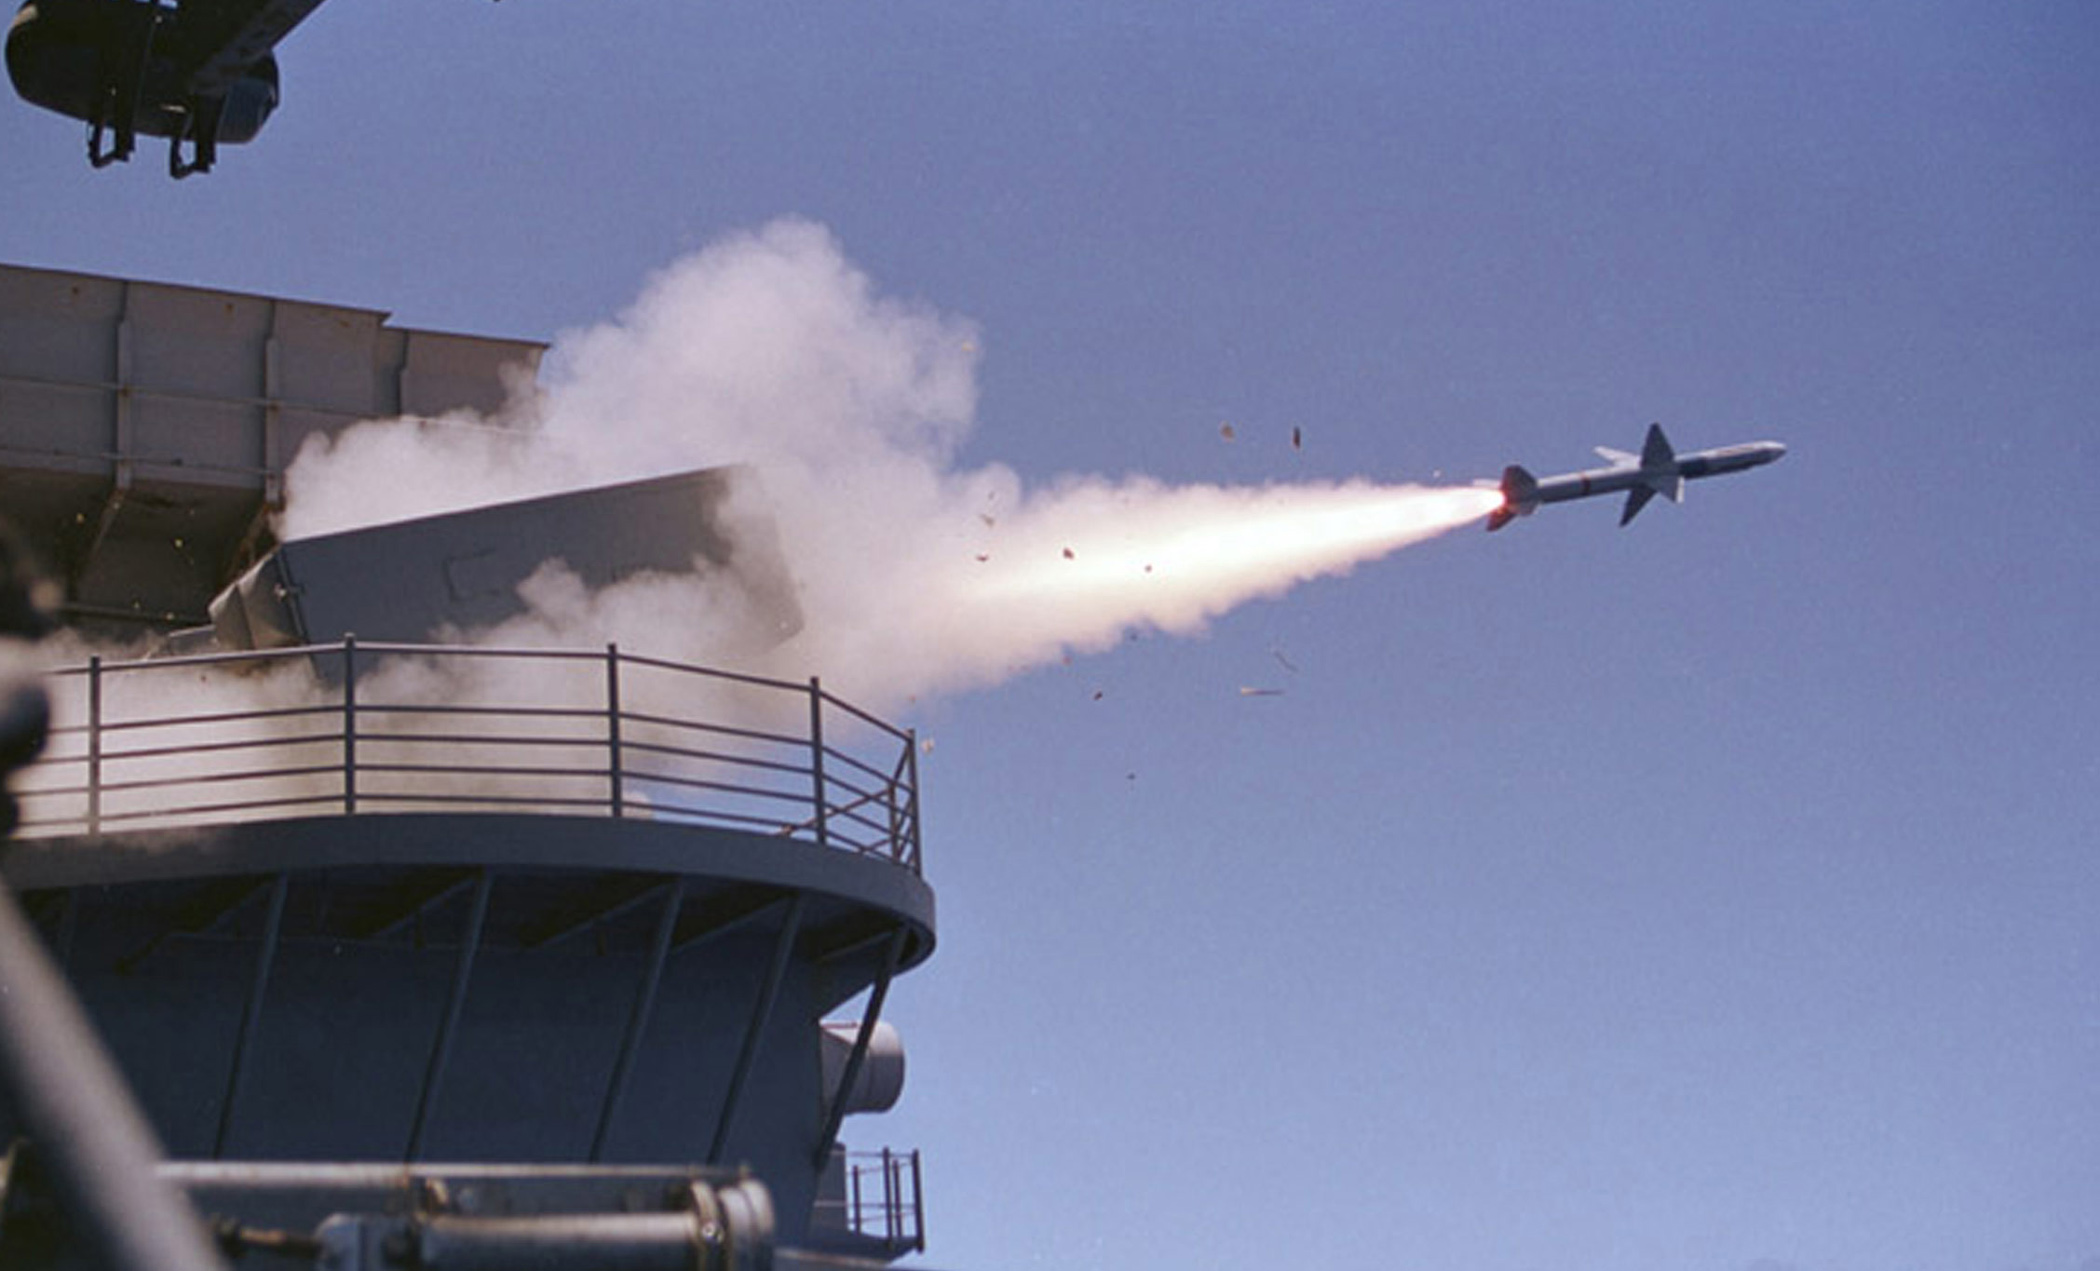 The Kitty Hawk fires off a Sea Sparrow Anti-Air missile.